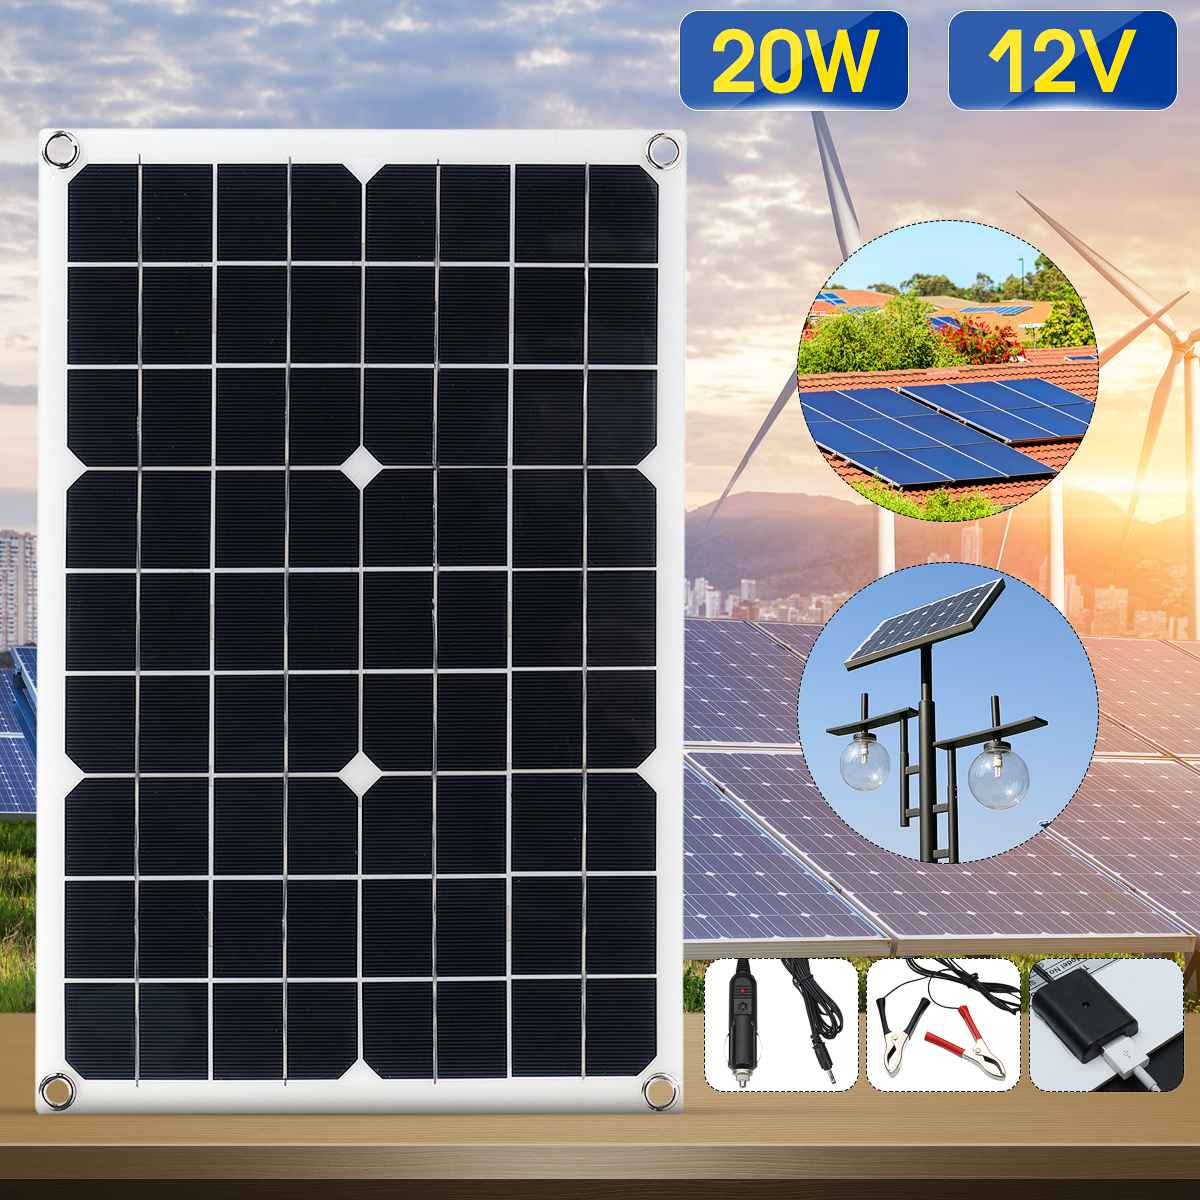 20W/25W/30W 18V Solar Panel Charger Solar Battery 10A Controller Monocrystalline Alligator Clip USB Car Outdoor Lead Acid Batter